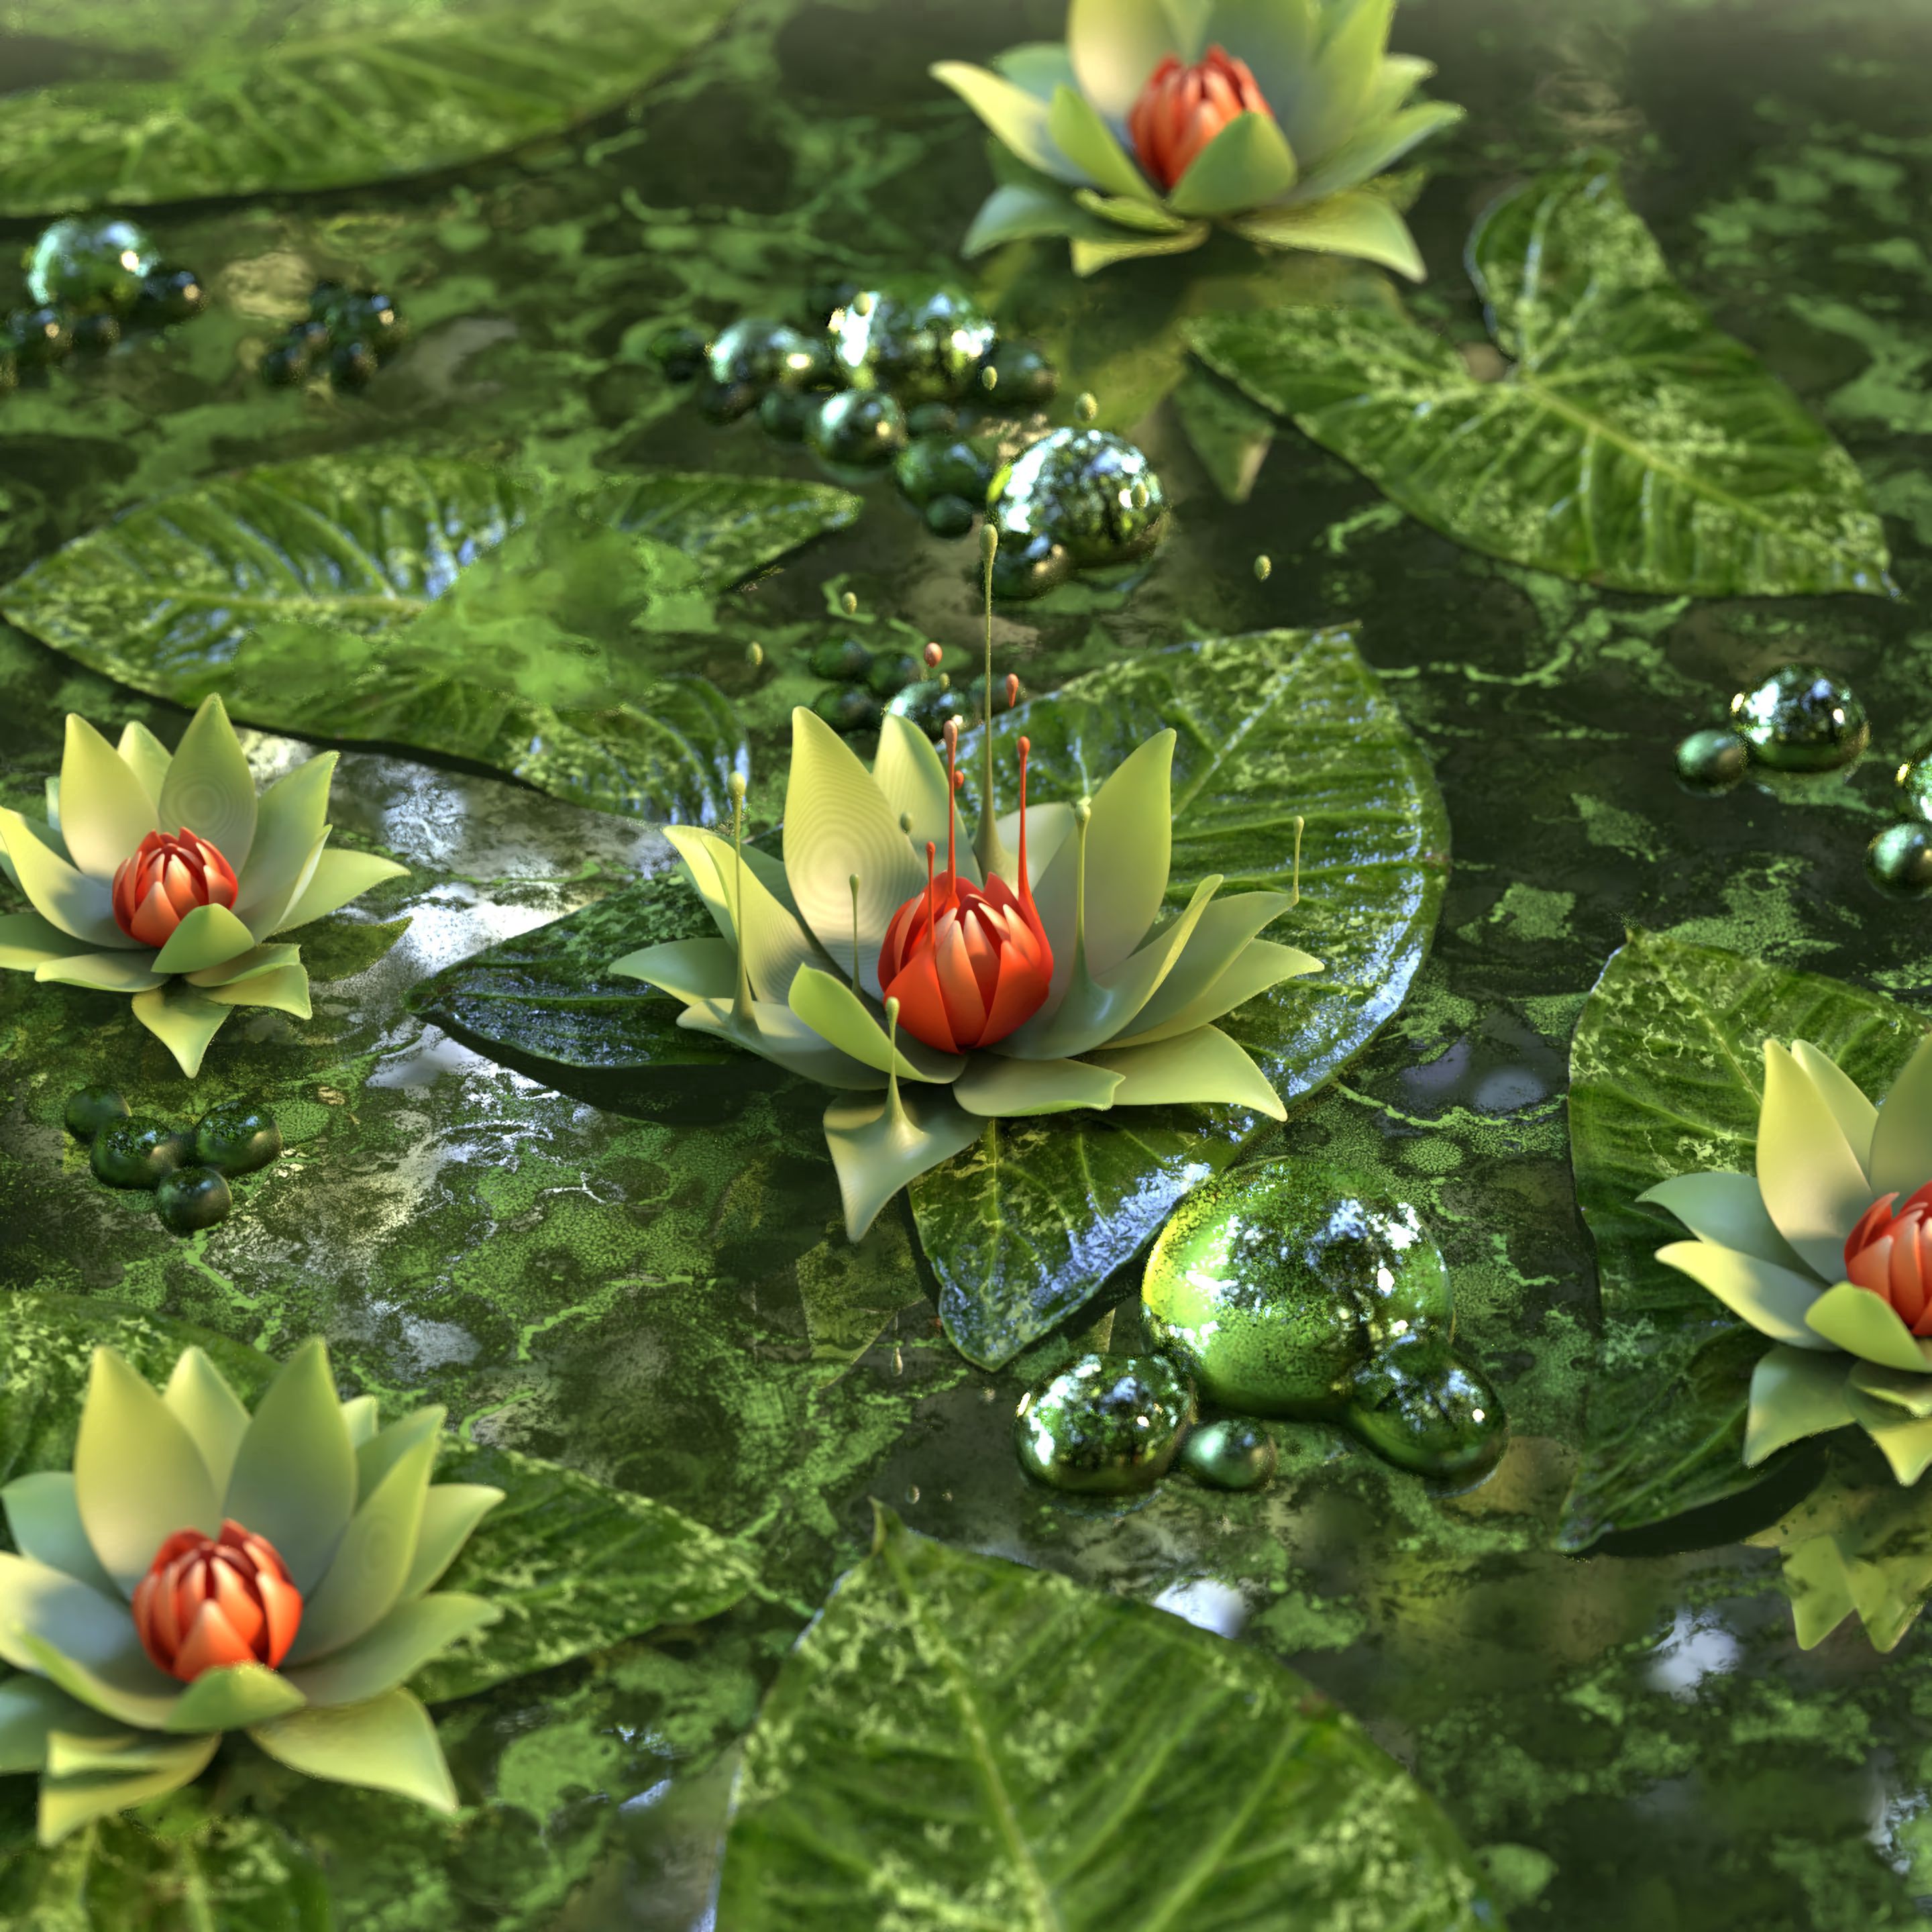 52898 descargar imagen 3d, flor, loto, verde, lirio de agua, nenúfar: fondos de pantalla y protectores de pantalla gratis